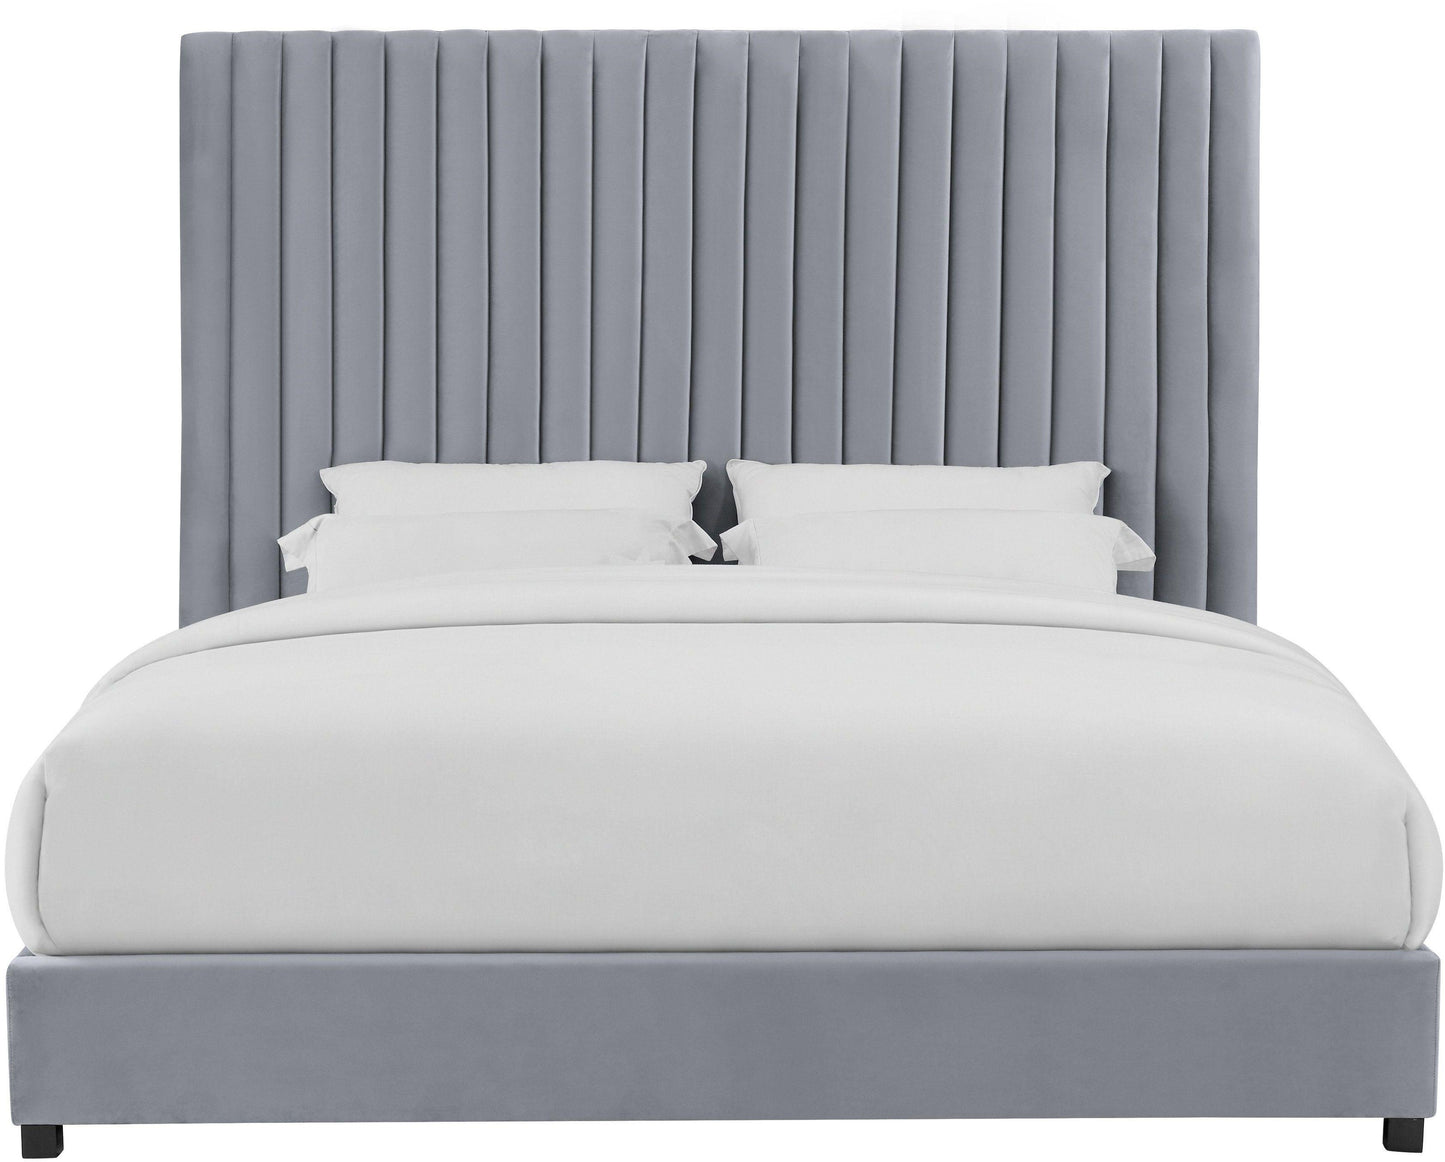 Arabelle Grey Bed King by TOV